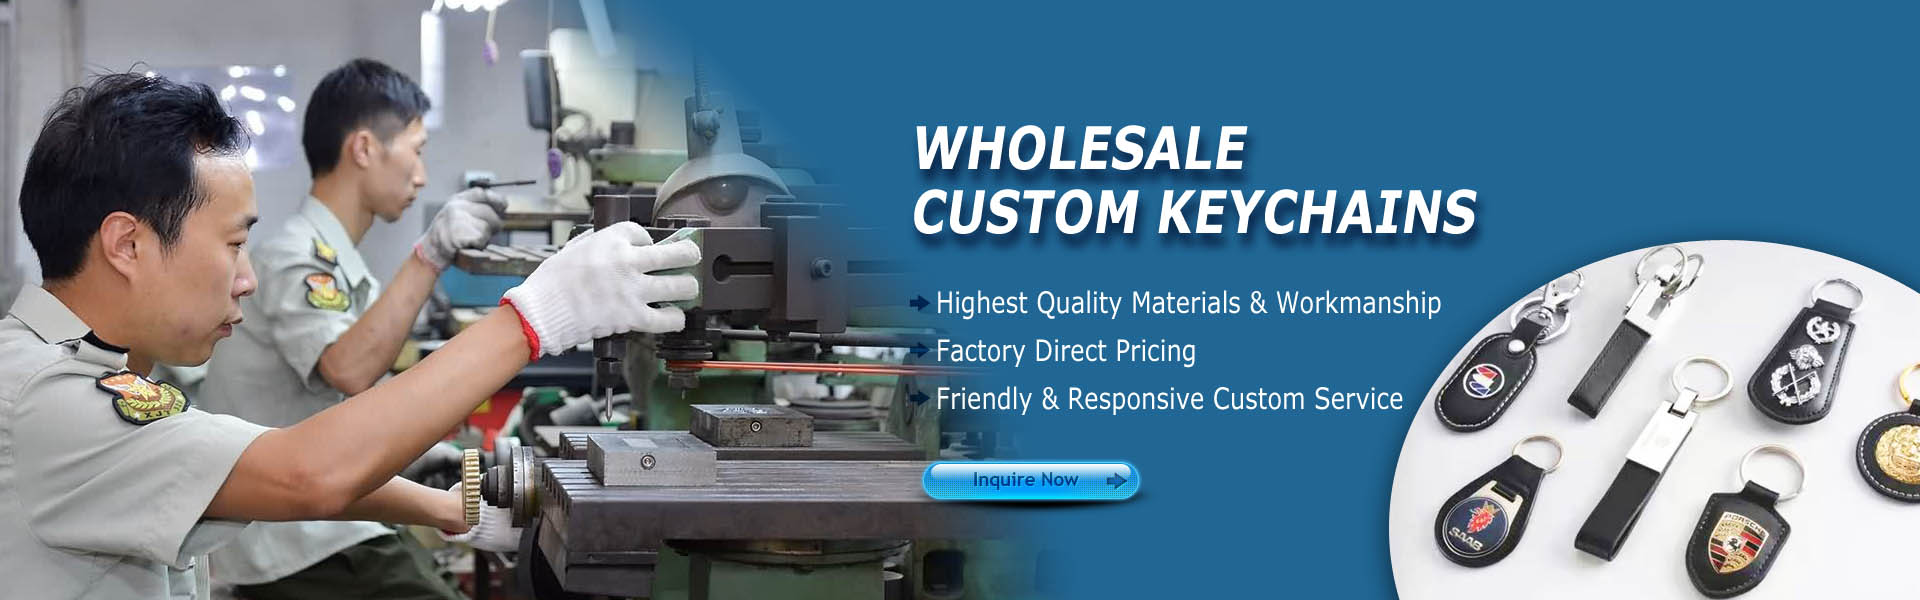 Wholesale Custom Keychains